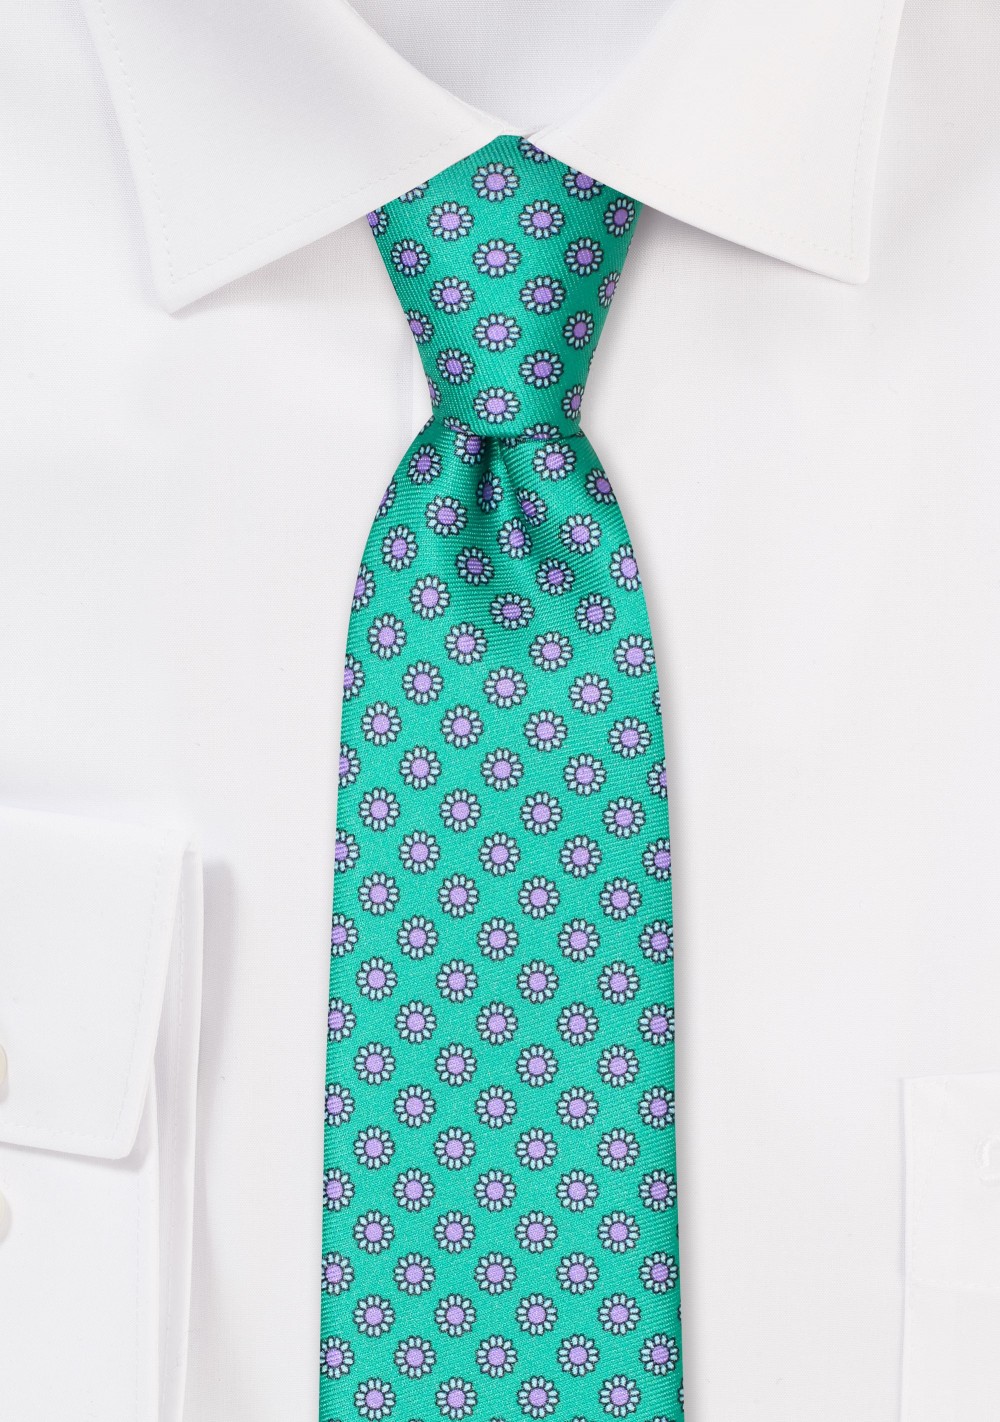 Bright Green Floral Tie in Skinny Width